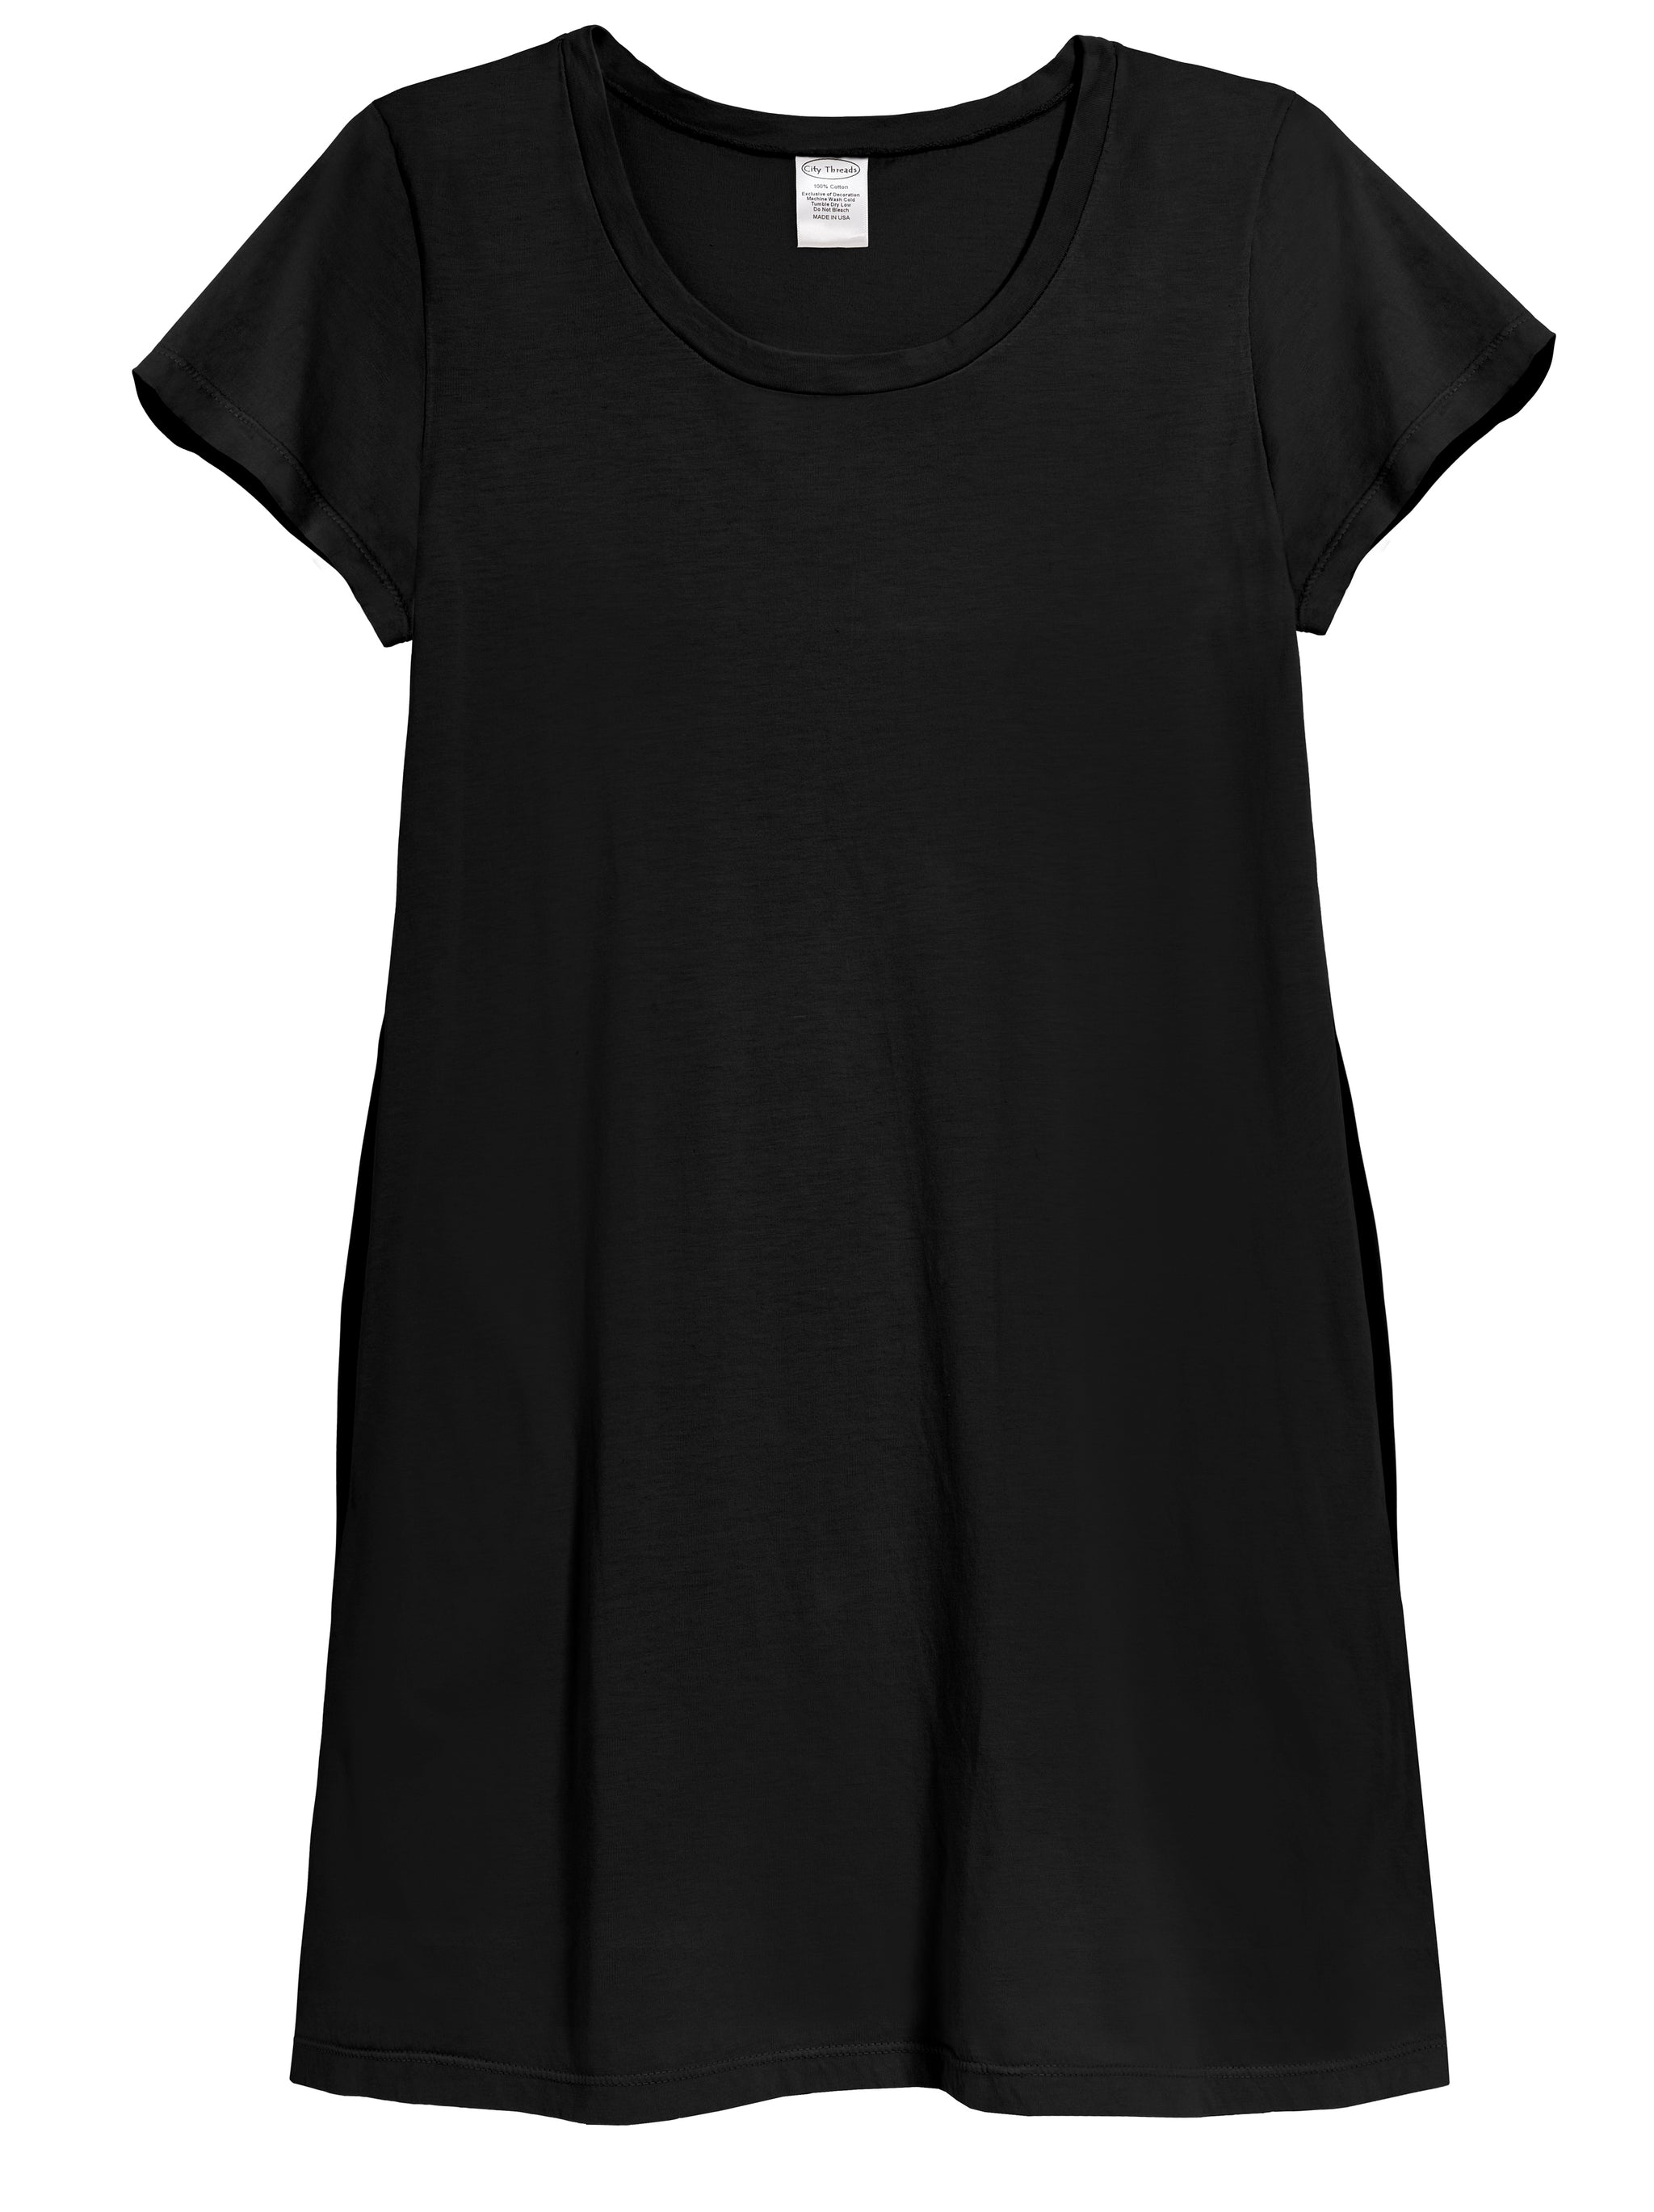 Women's Soft Supima Cotton Easy Cover-Up T-Shirt Pocket Dress